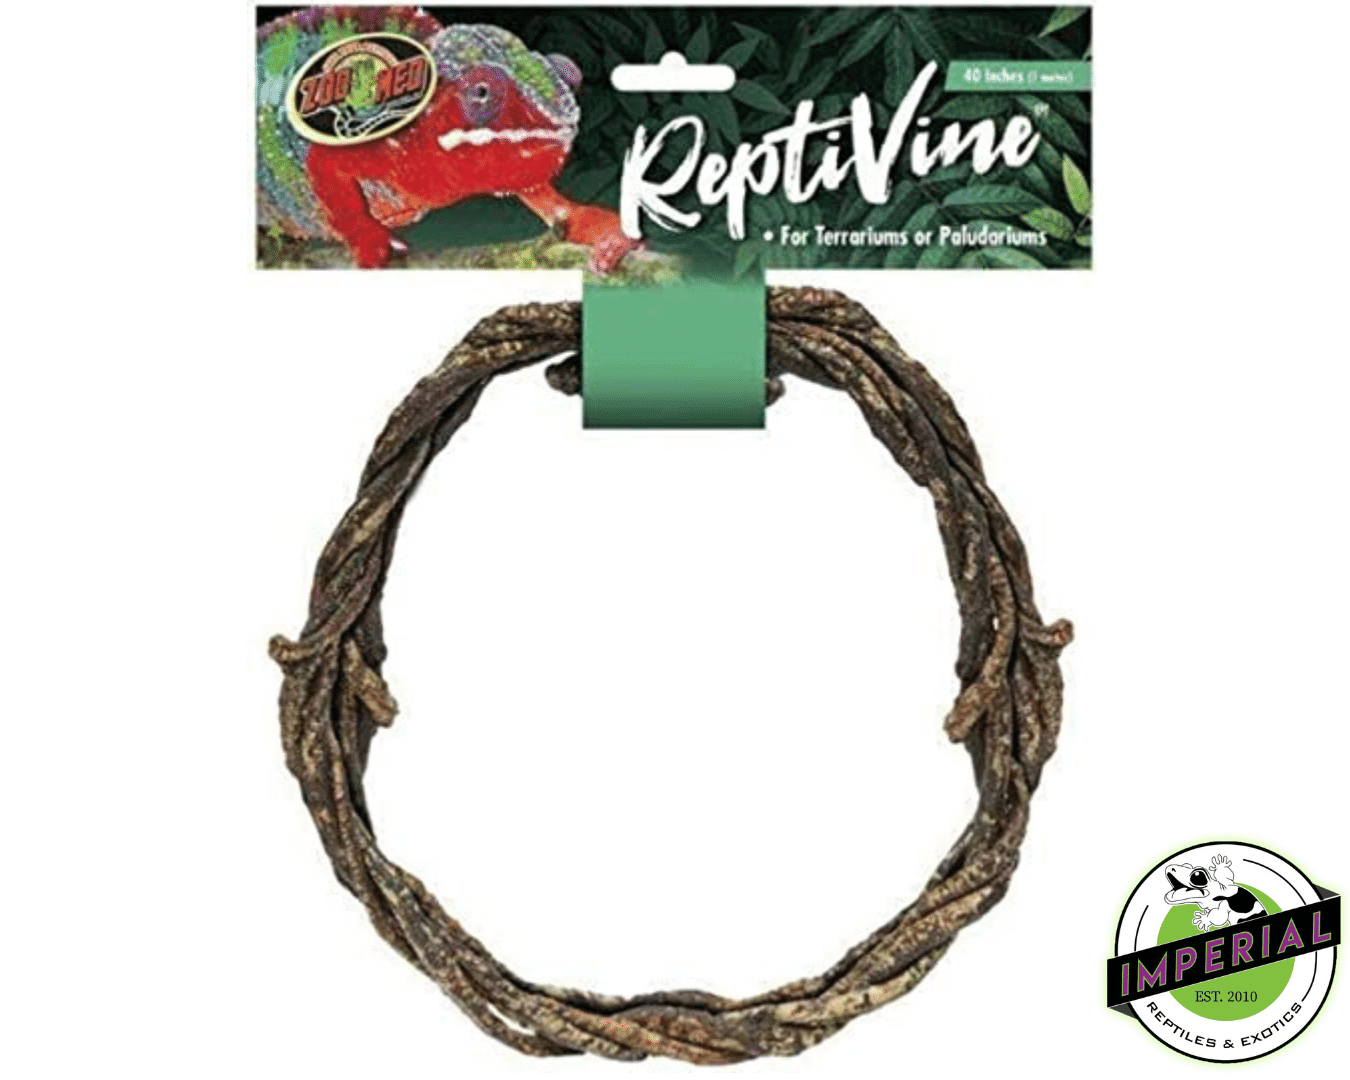 reptile vine for sale online, buy cheap reptile supplies near me